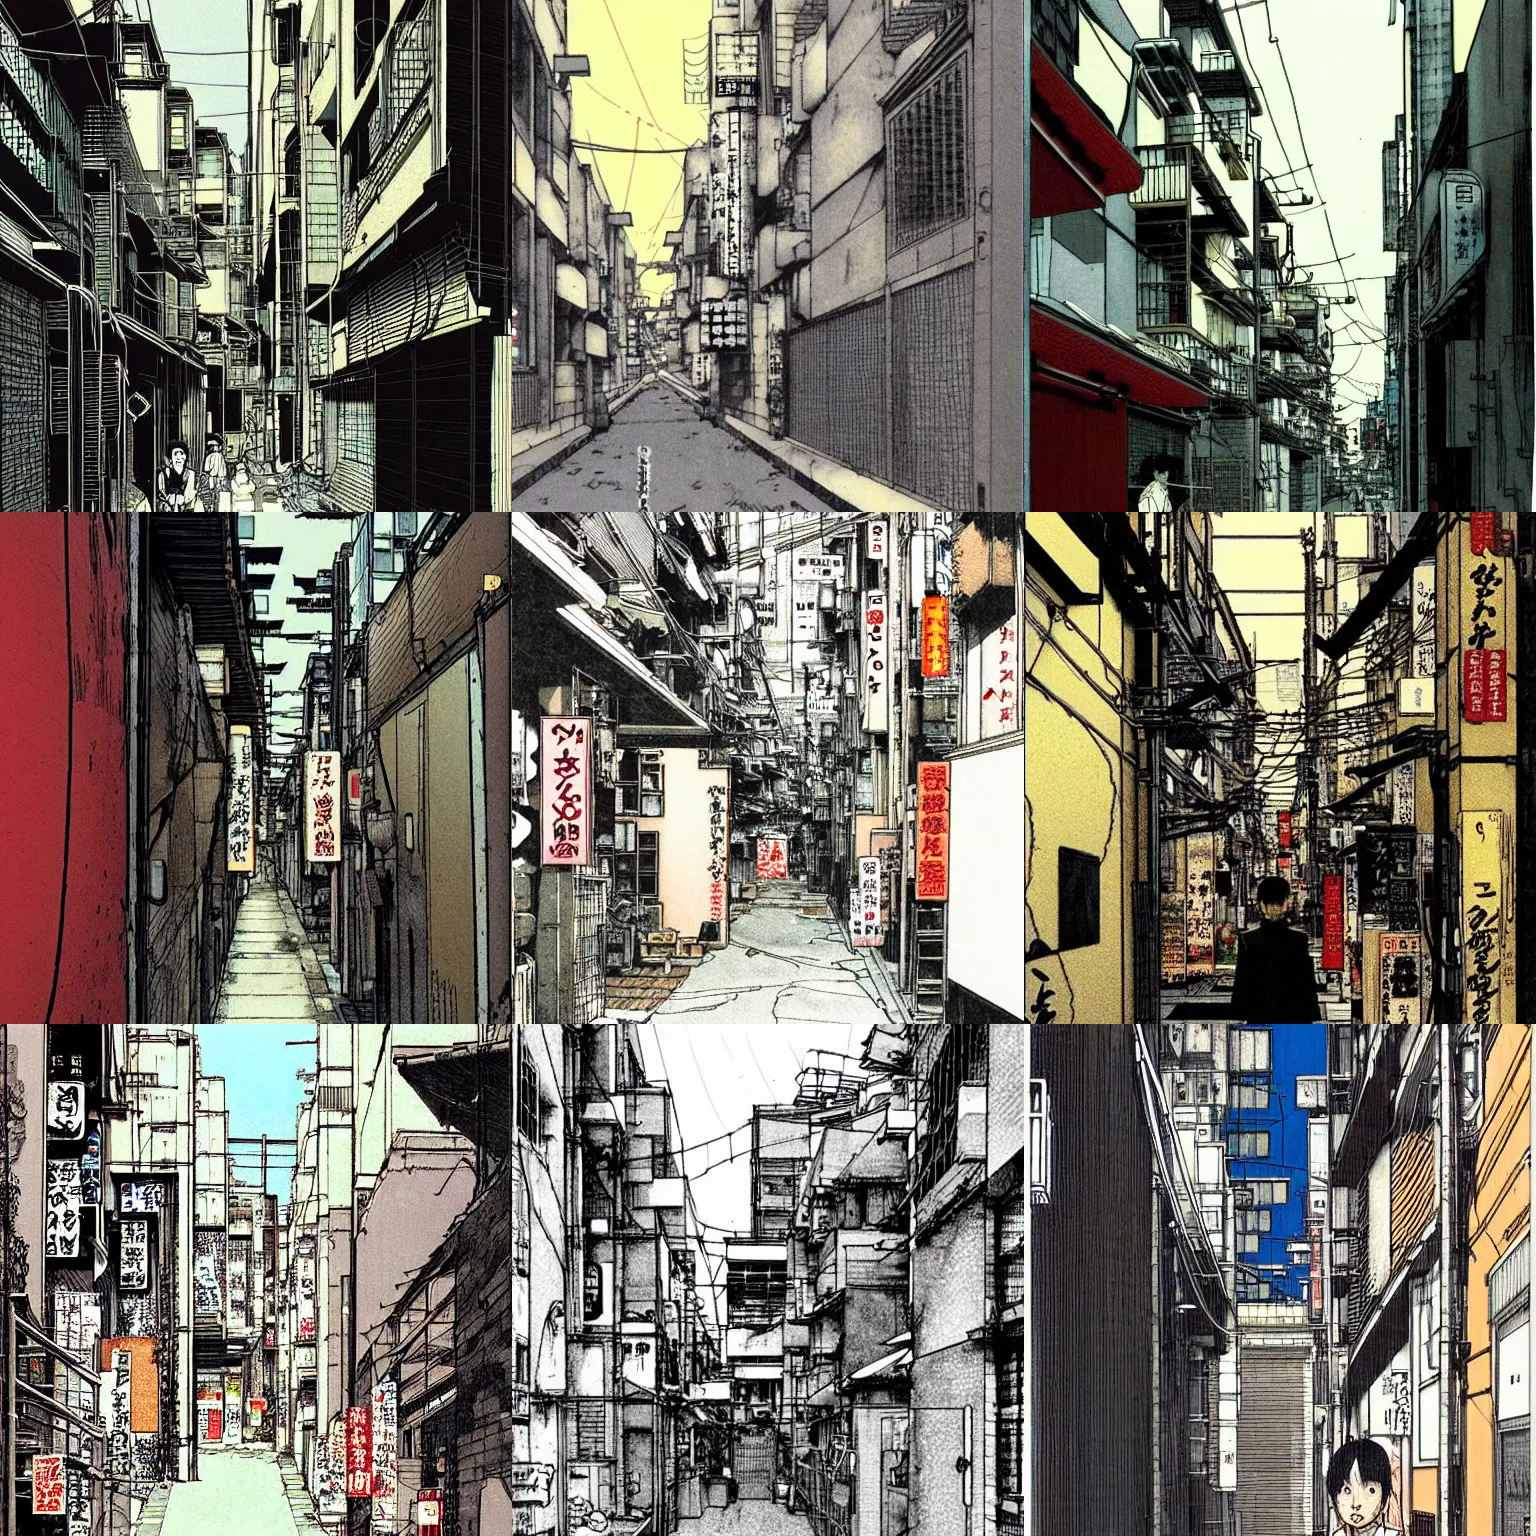 Prompt: tokyo alleyway by katsuhiro otomo, beautiful